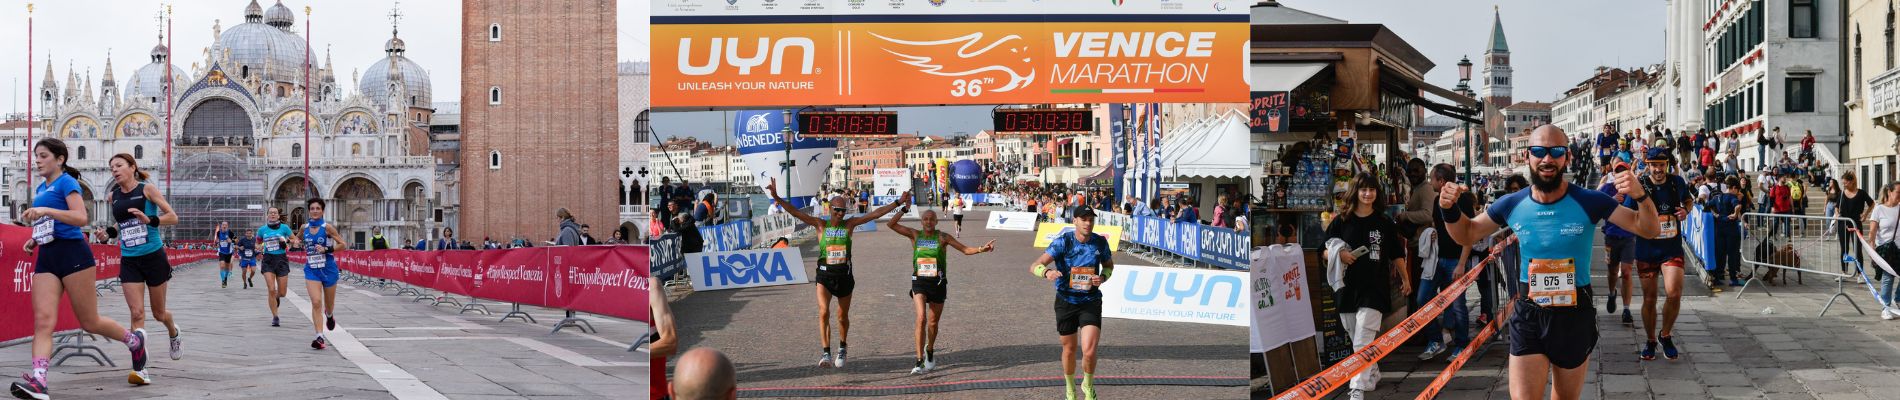 Rete del Dono Venicemarathon Maratona Venezia